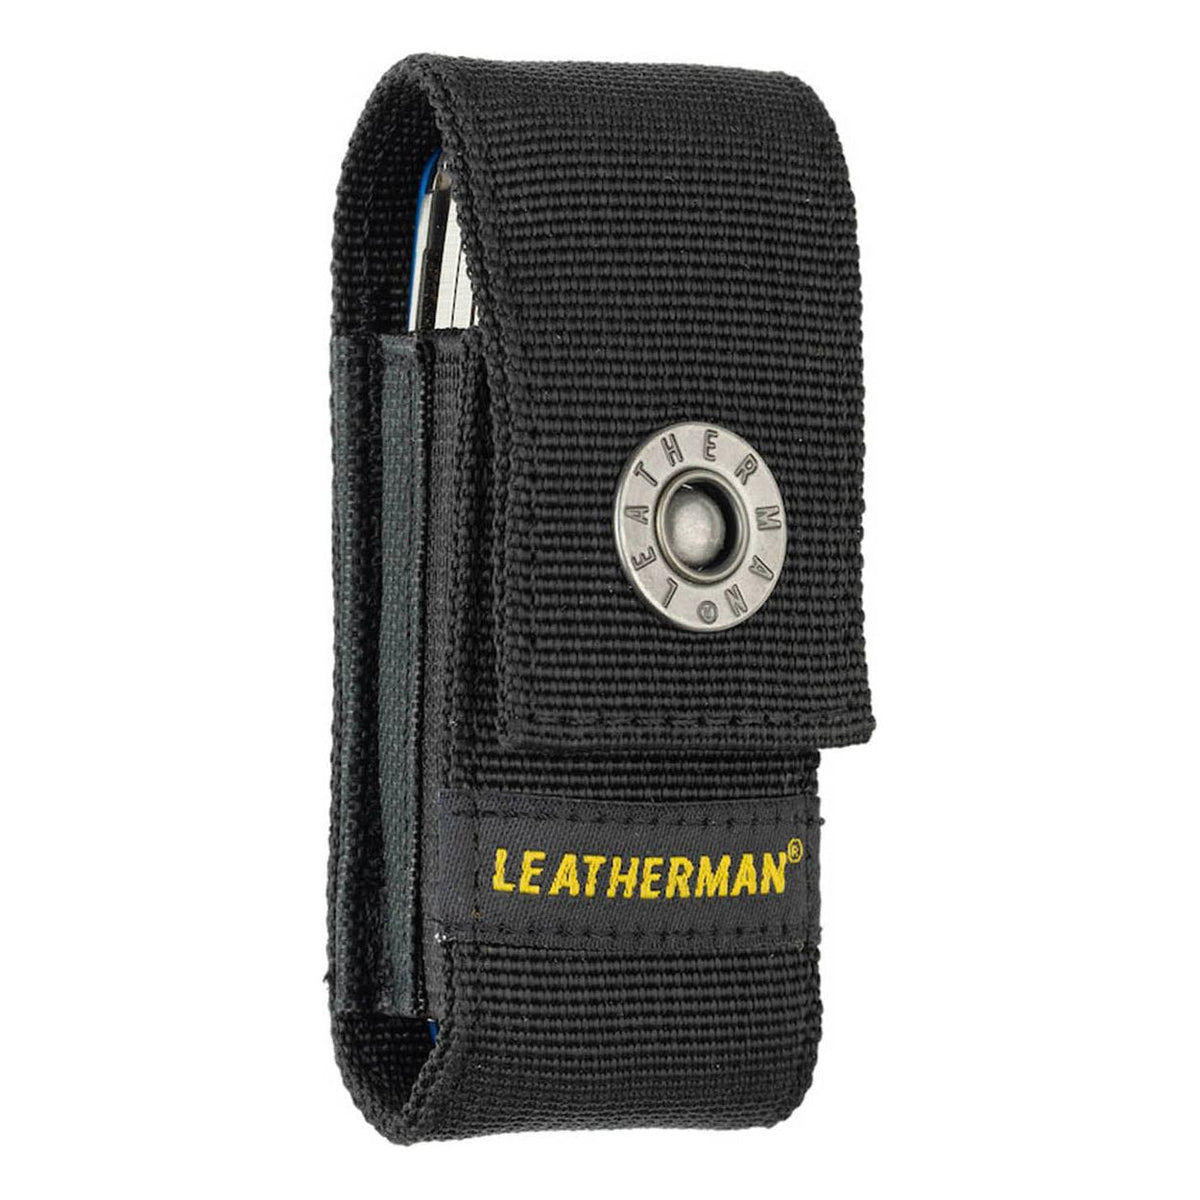 Leatherman Signal Multi Tool with Nylon Sheath - Cobalt